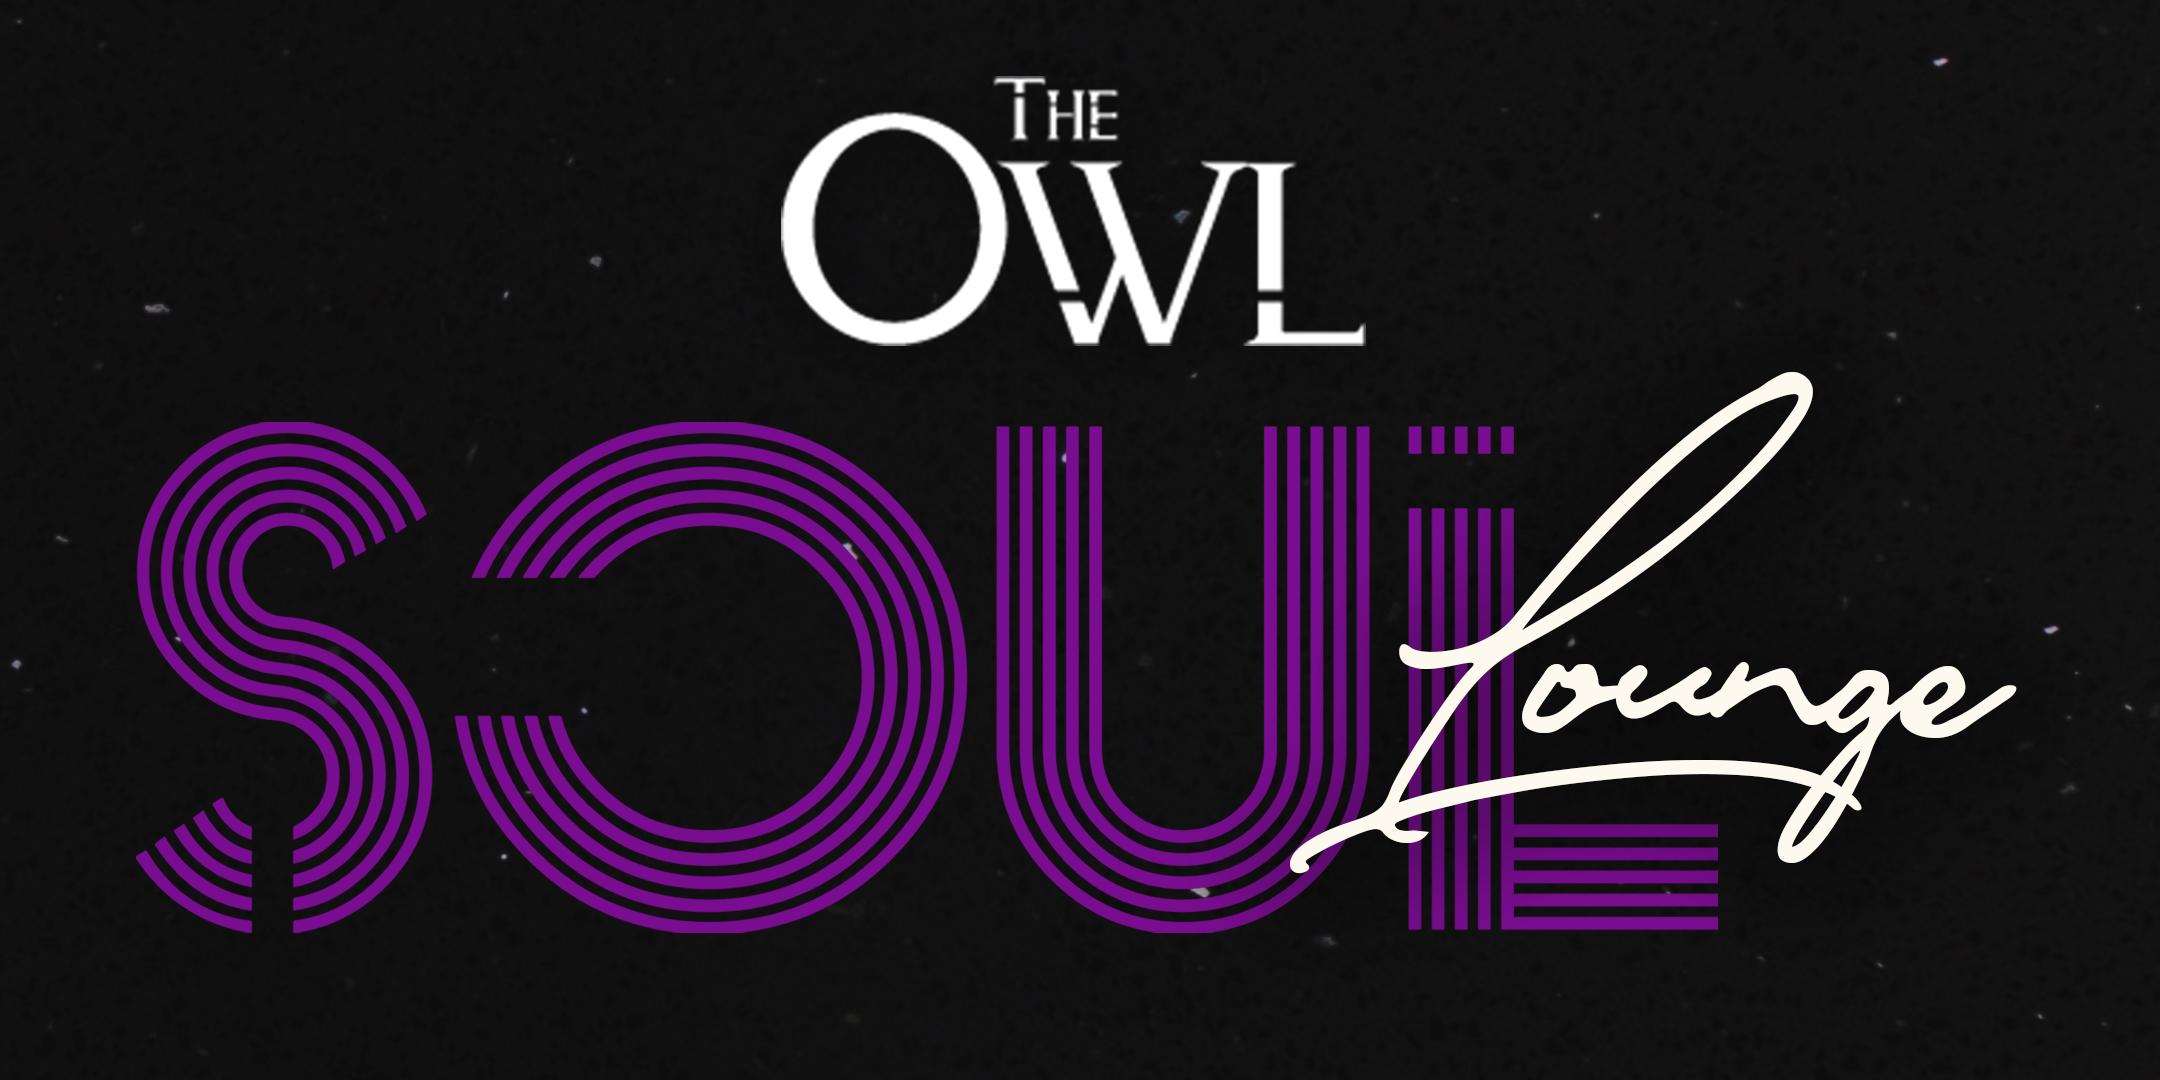 Soul Lounge Thursdays at The Owl